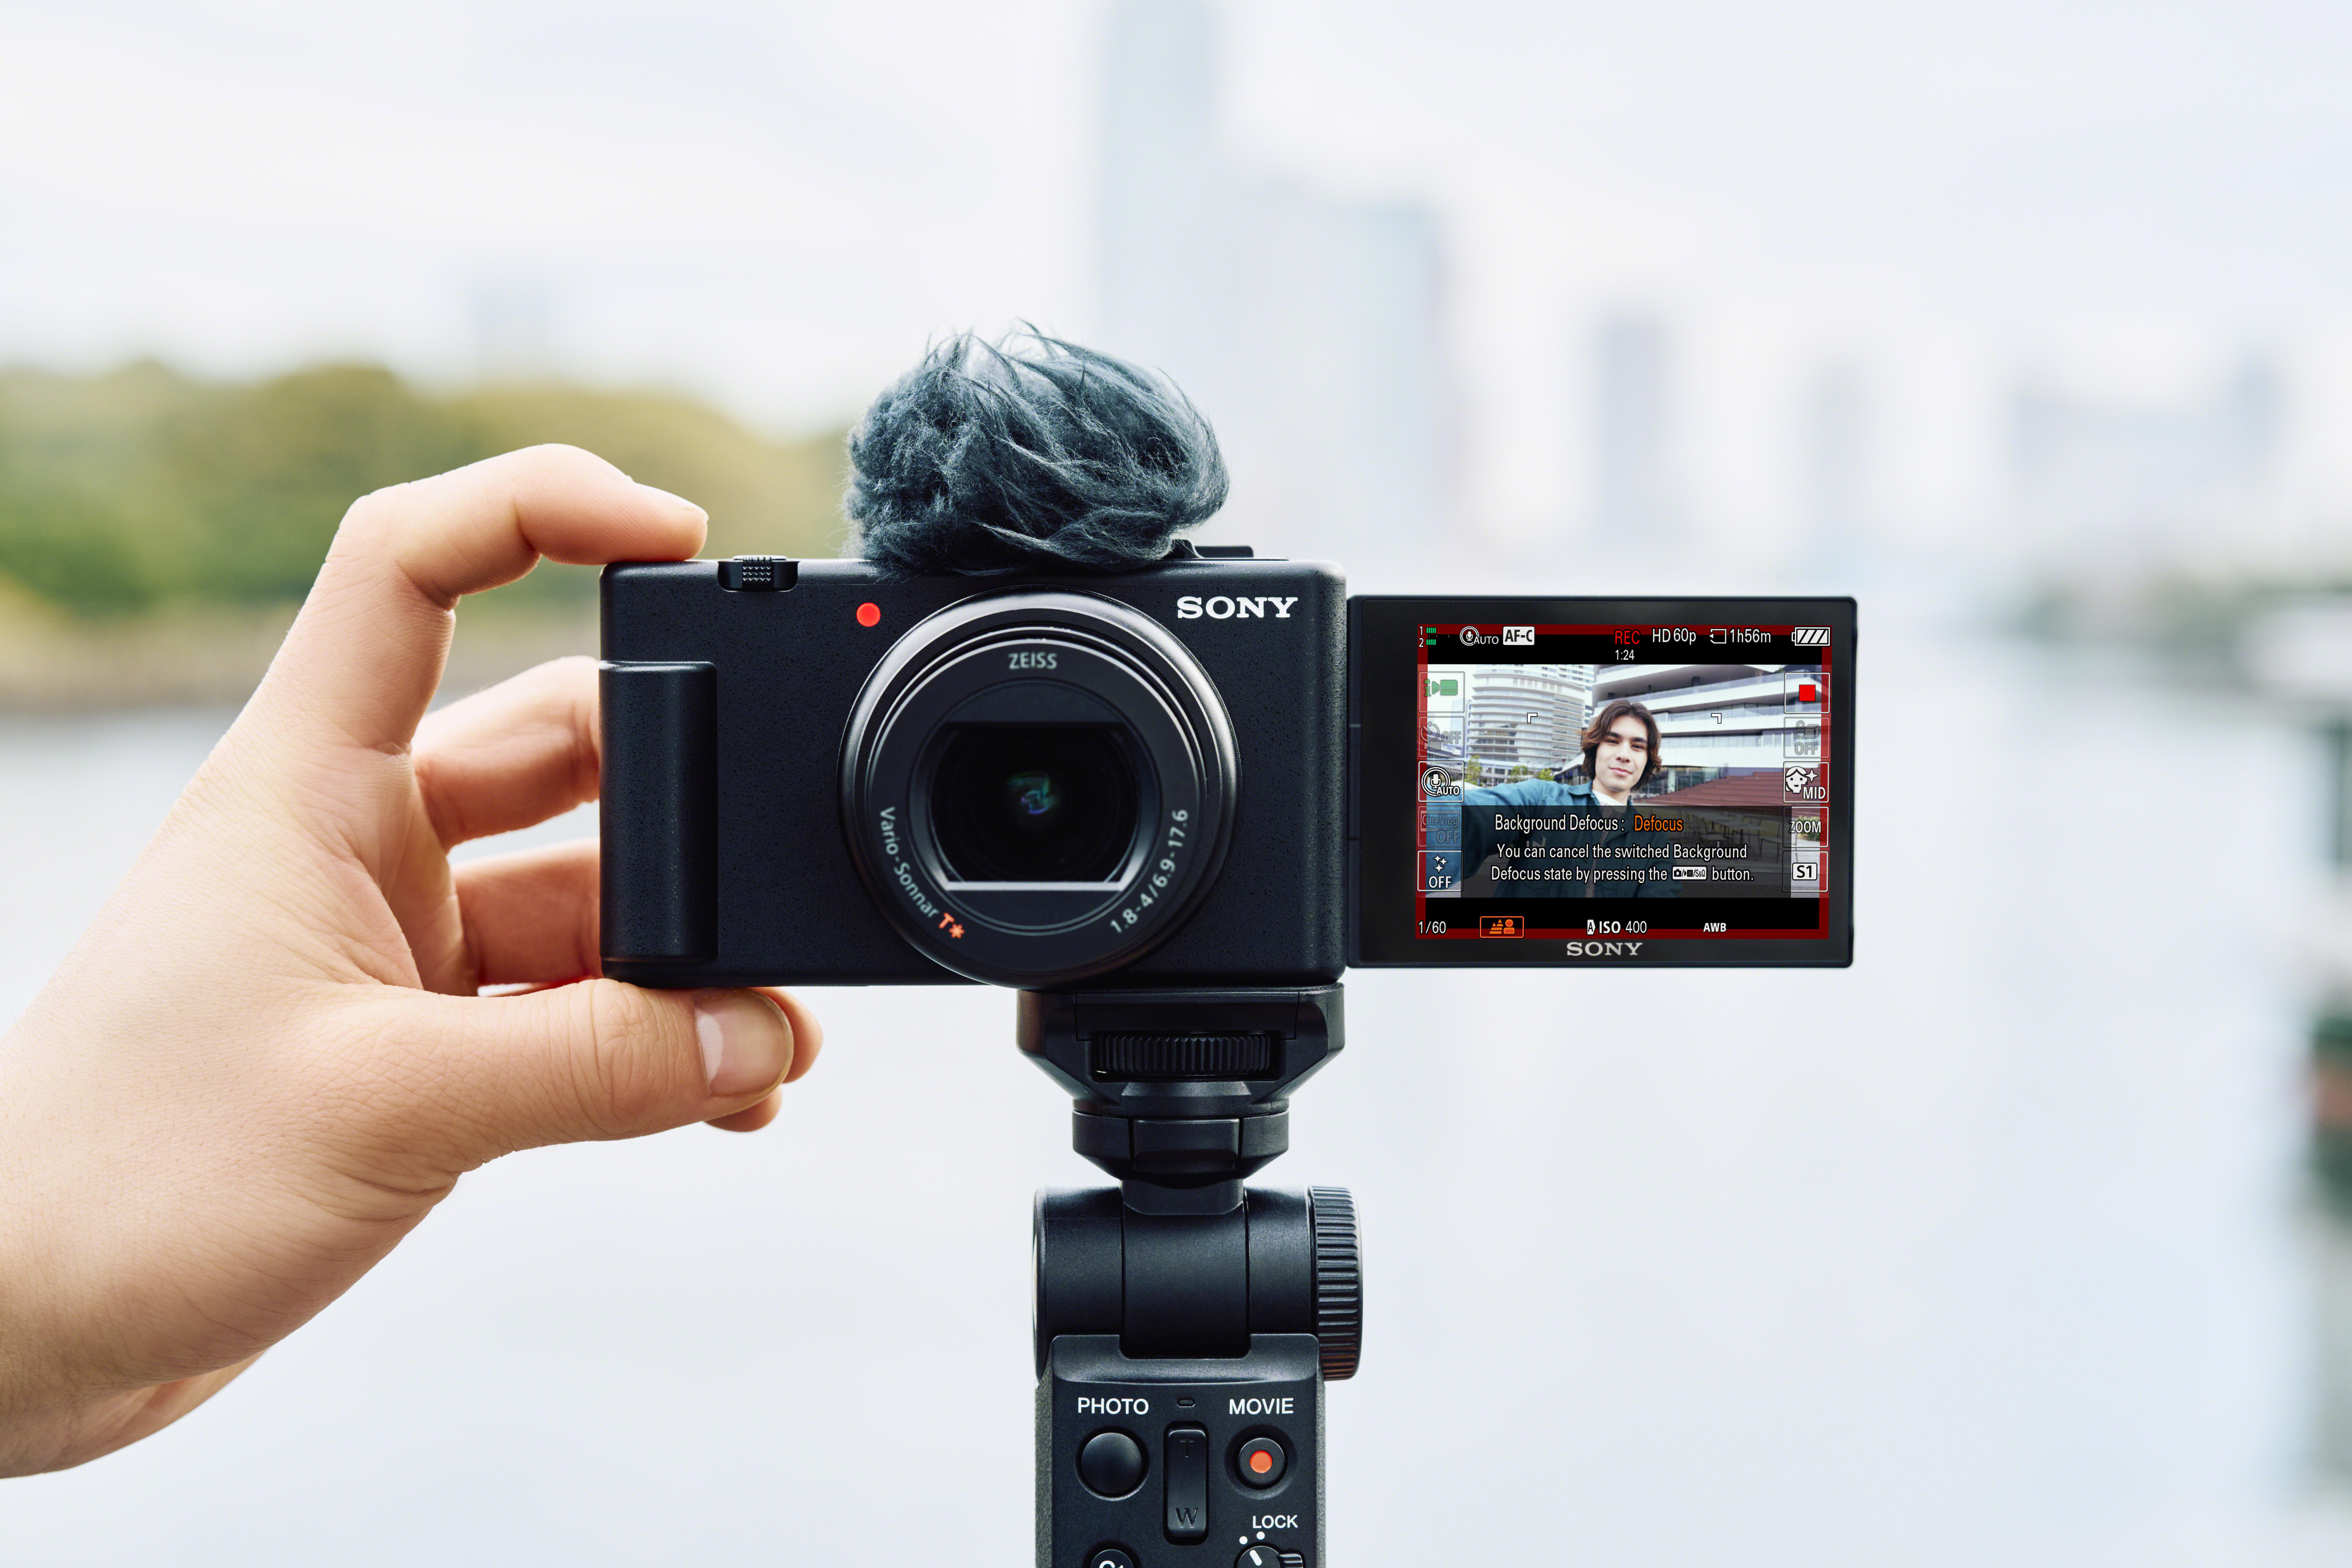 Zoom, SONY II opt. Vlog WLAN Digitalkamera Selfie-Touchdisplay, ZV-1 Schwarz, Fine Xtra 2.7x